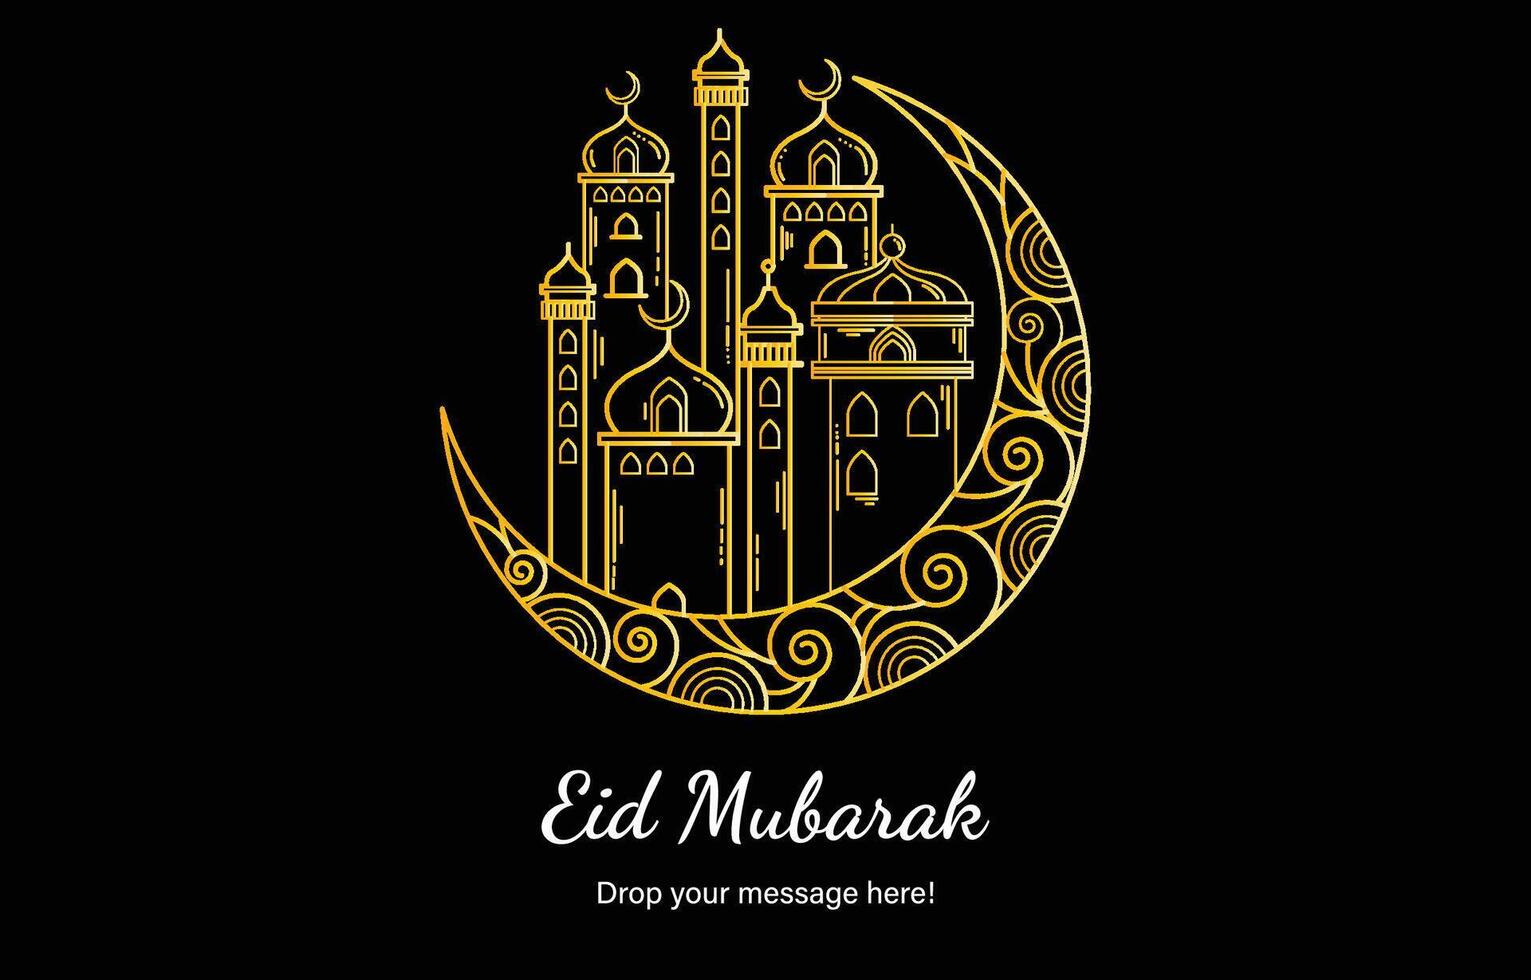 Eid Mubarak beautiful theme background of dark yellow color with vector